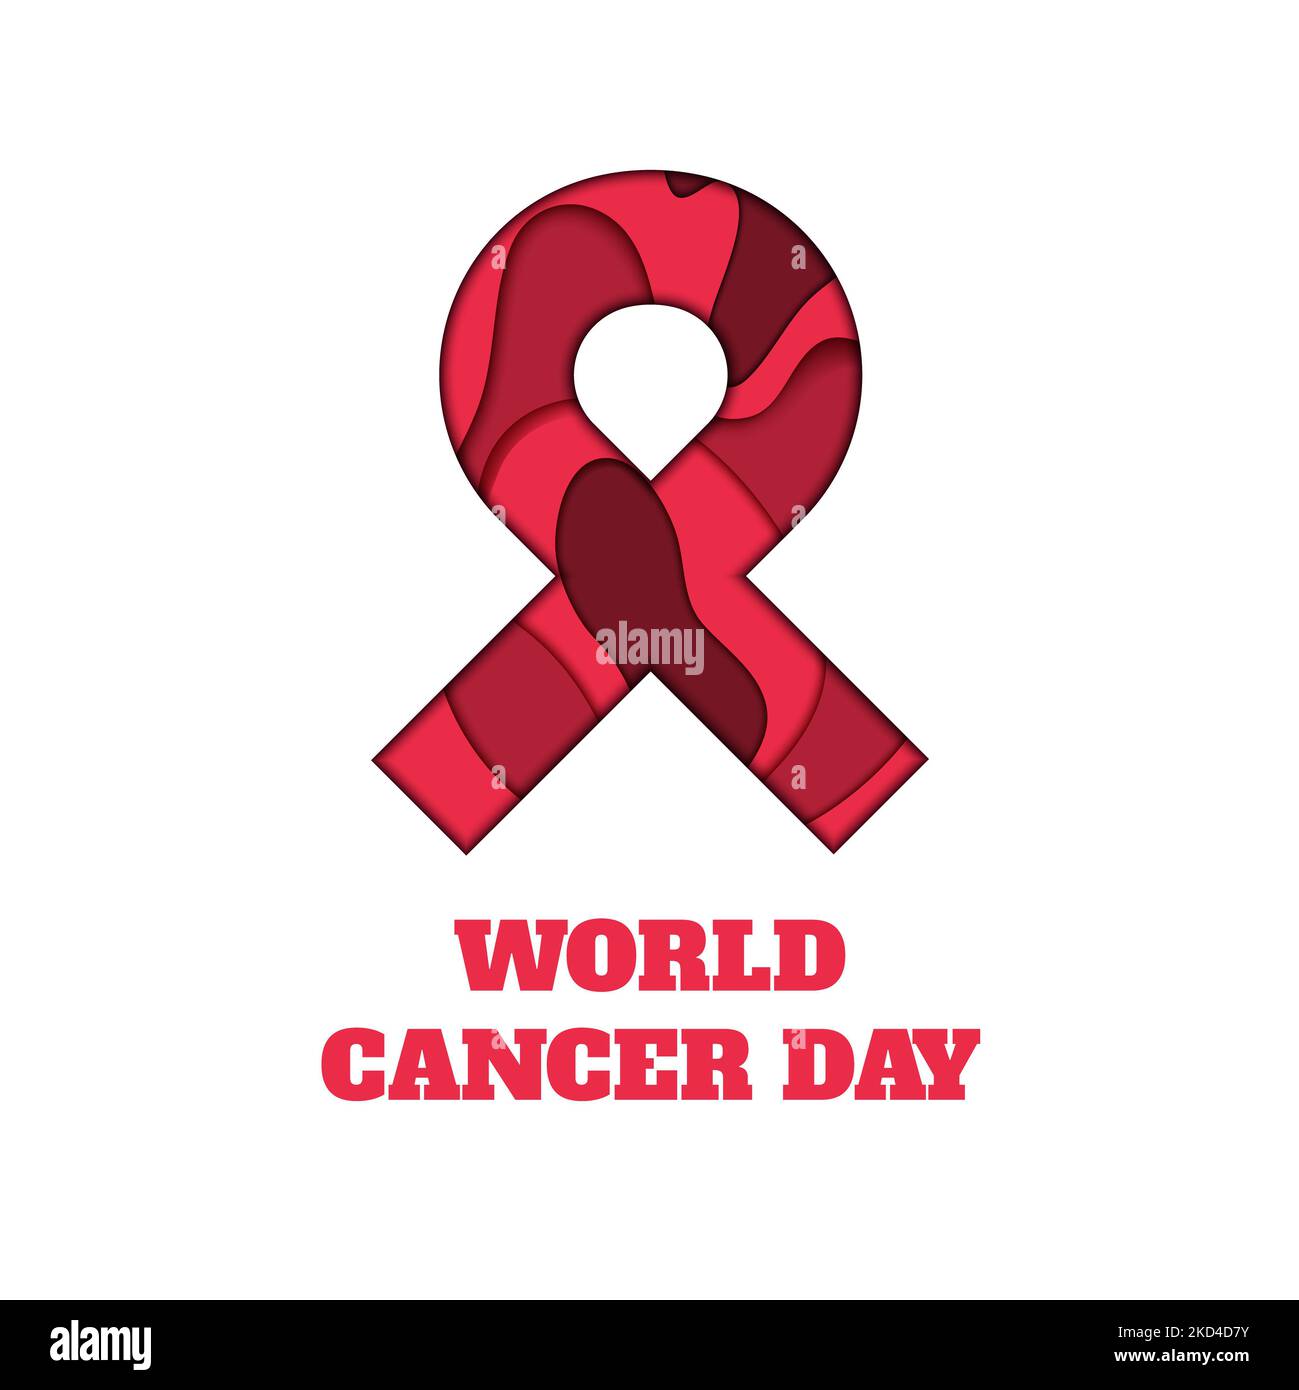 Cancer awareness, conceptual illustration Stock Photo